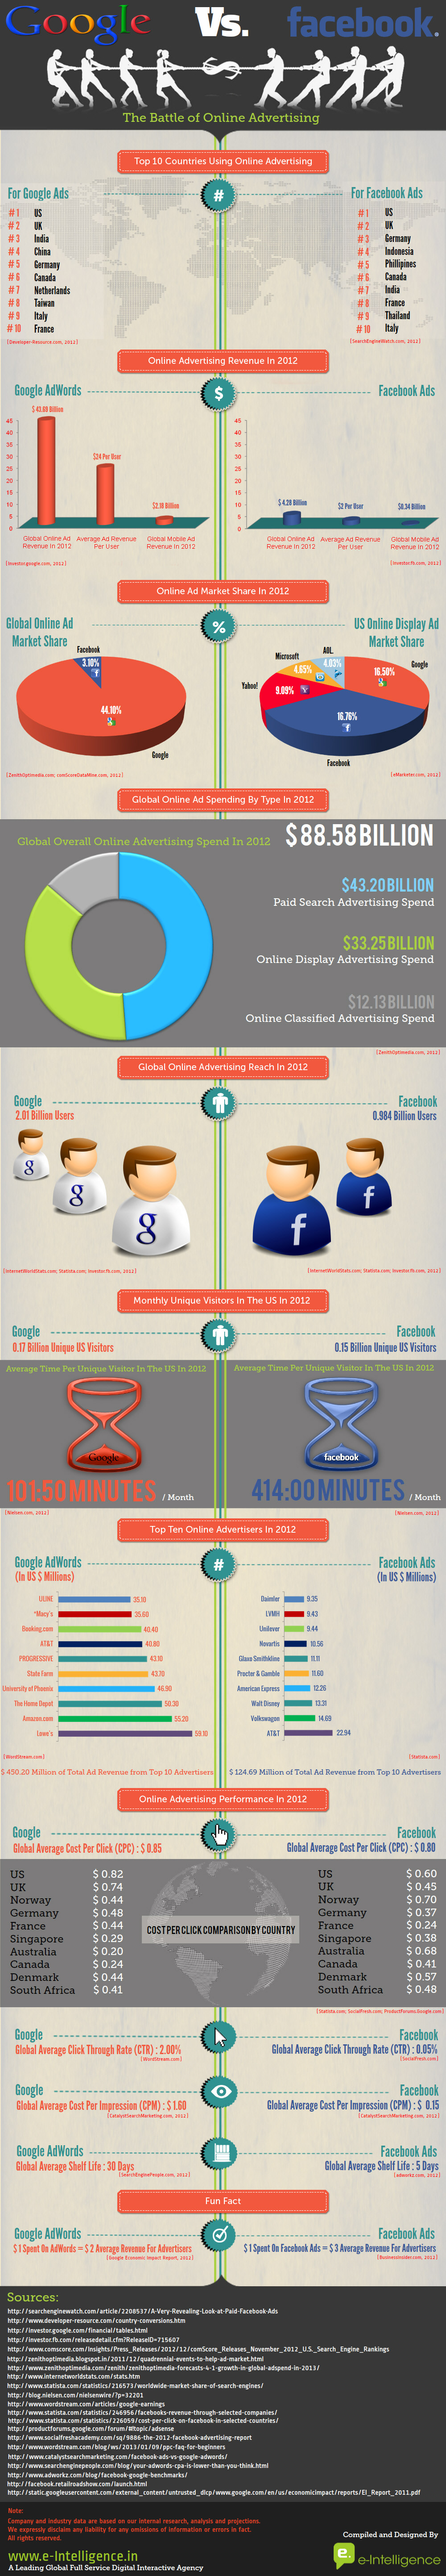 Google vs. Facebook; The Battle of Online Advertising